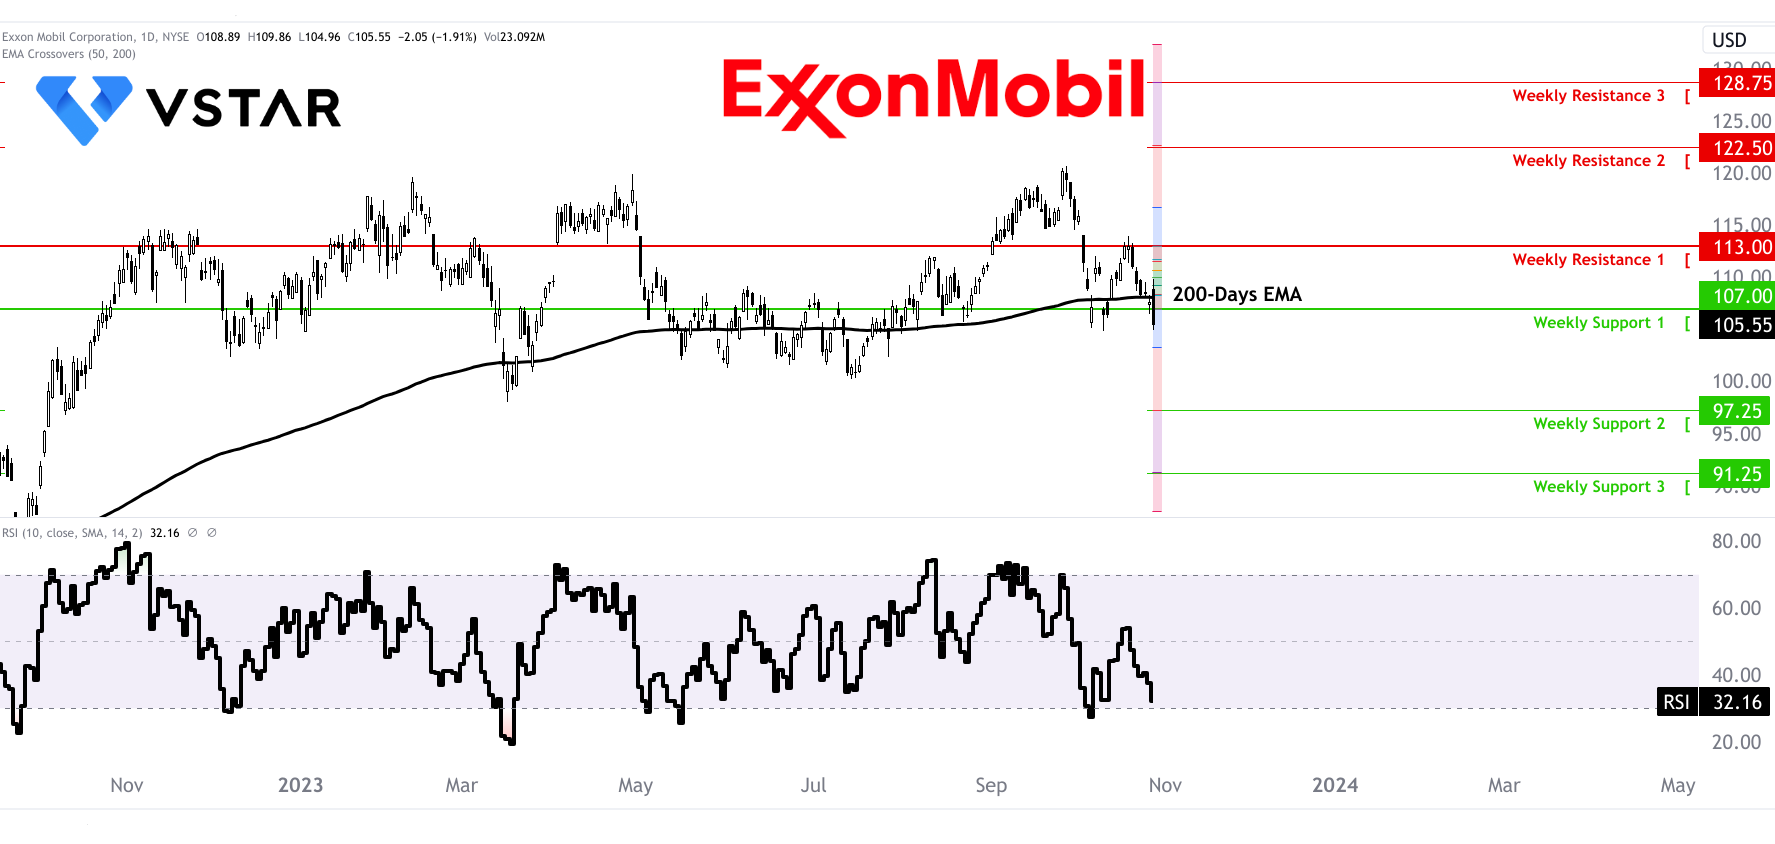 Exxon Mobil's Energy Odyssey